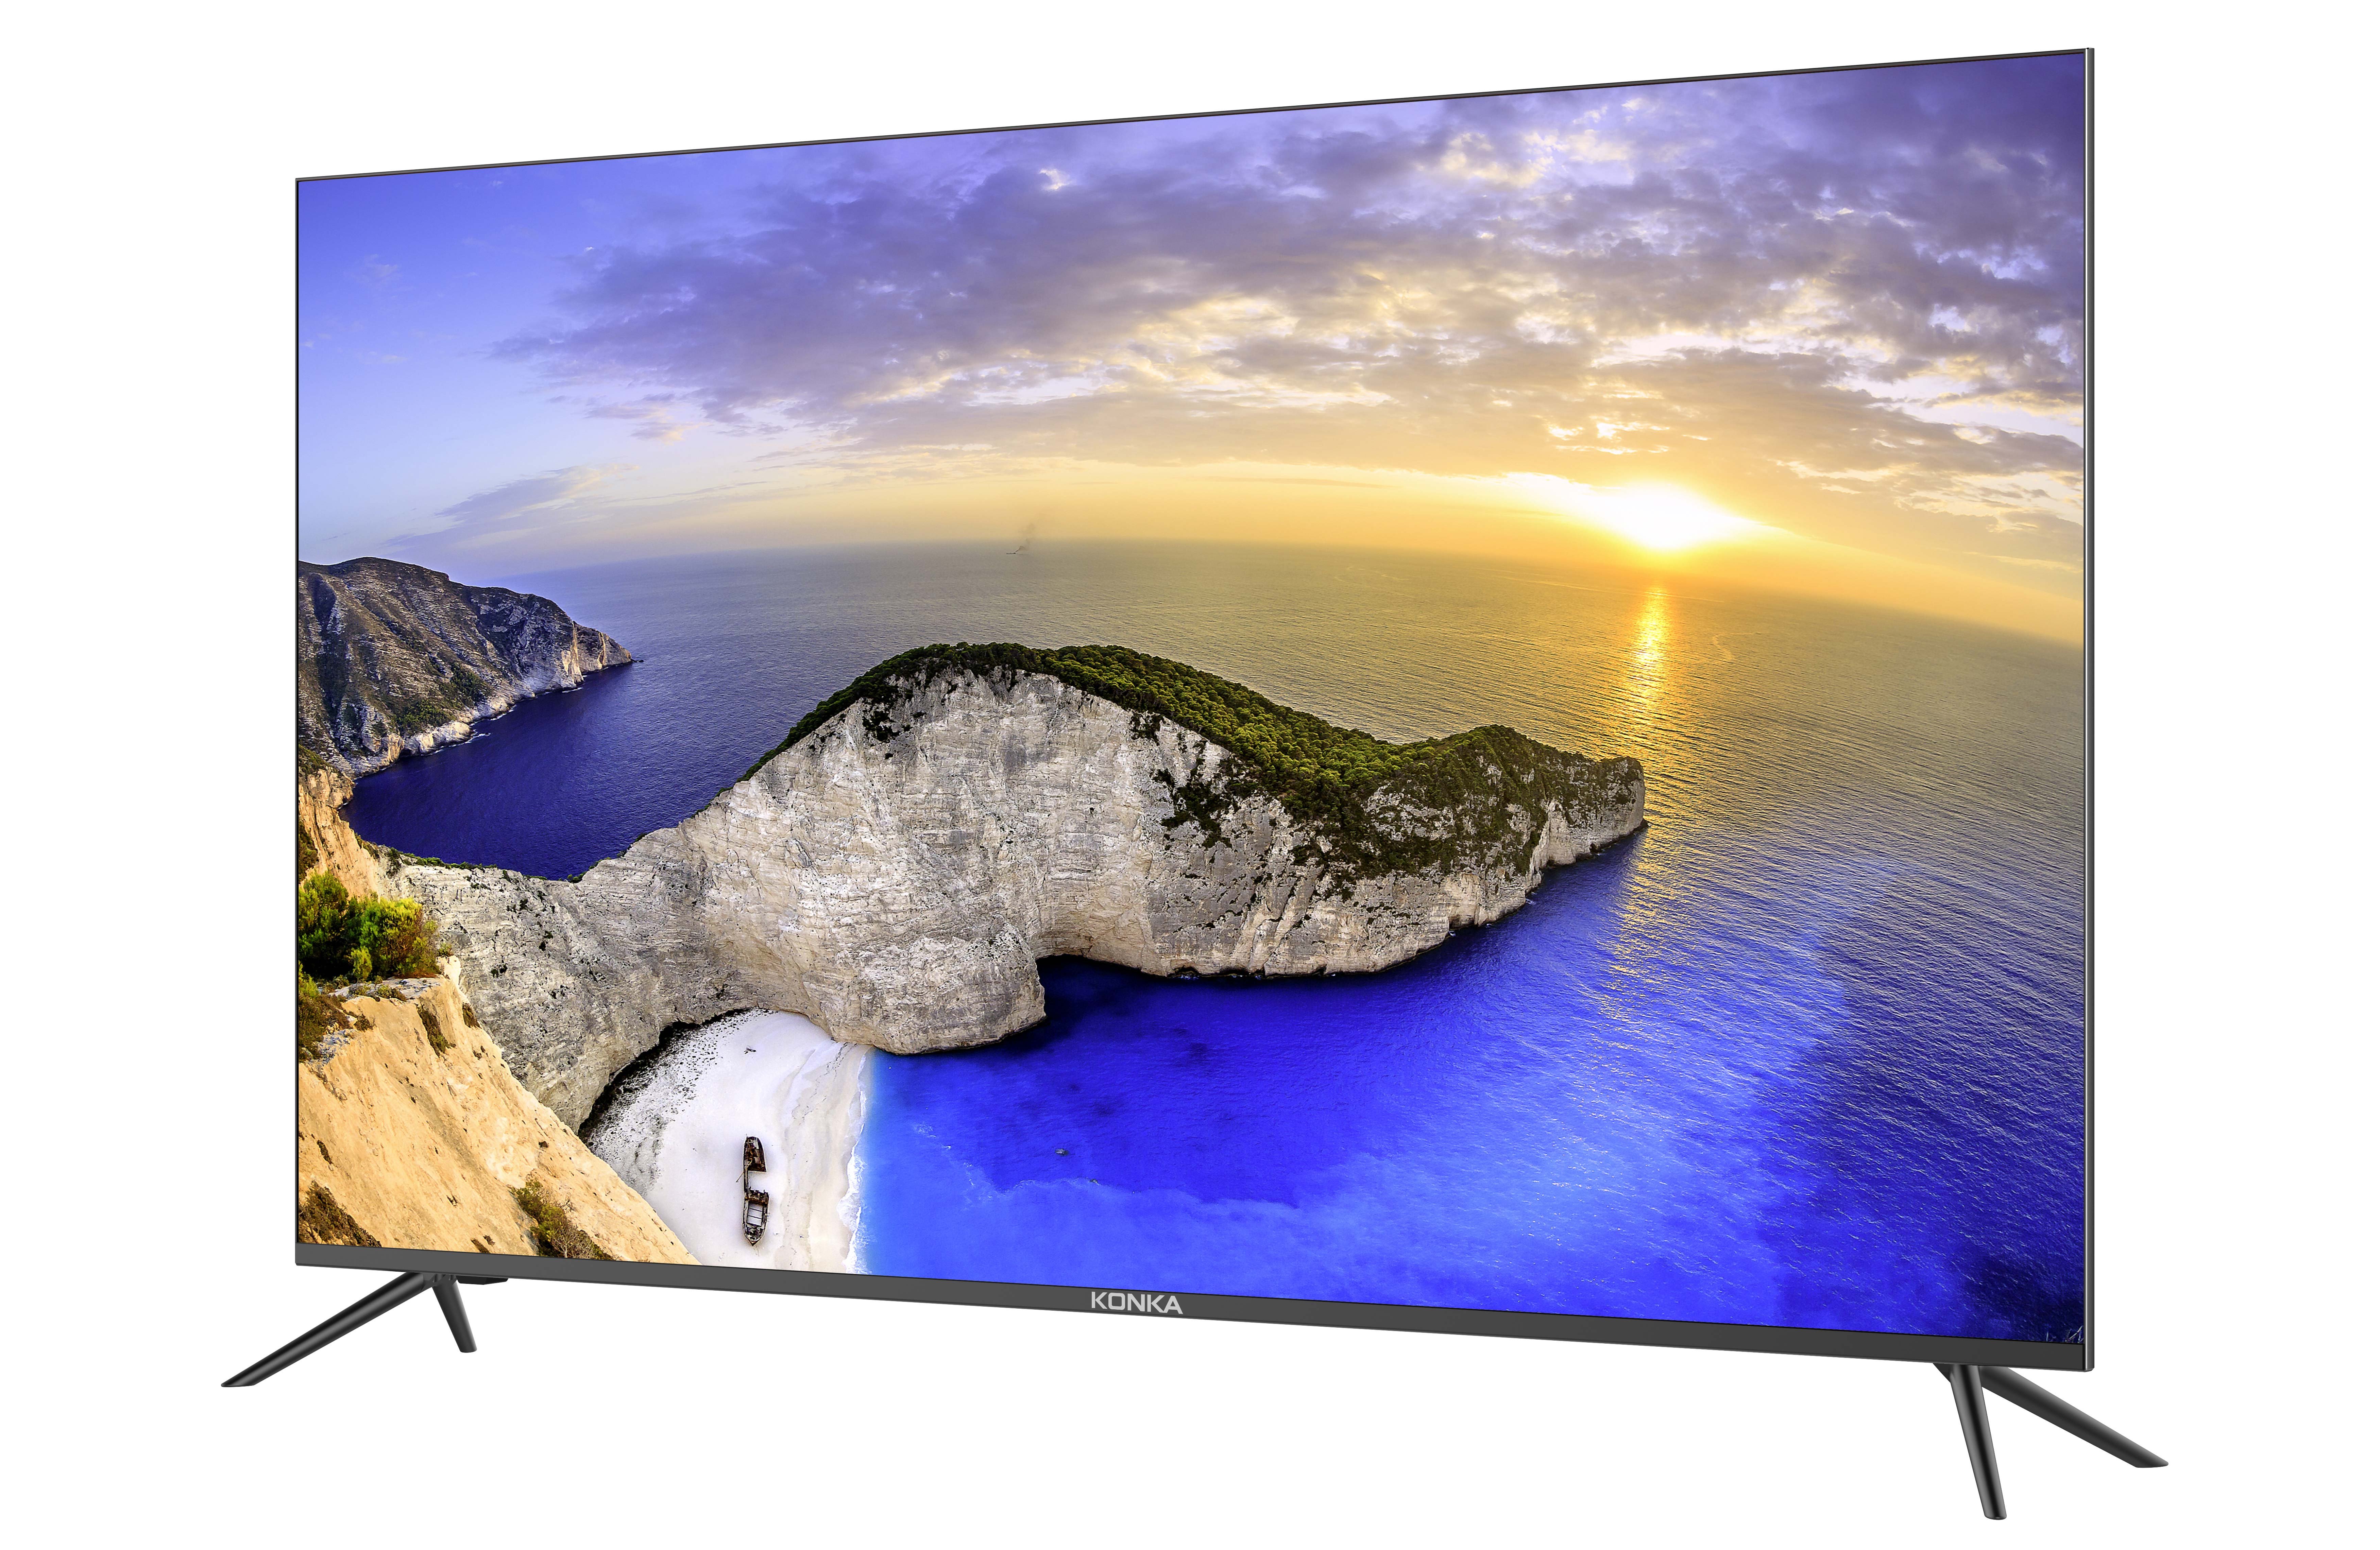 Konka Q7 Series - QLED Smart TV - 55-inch.jpg